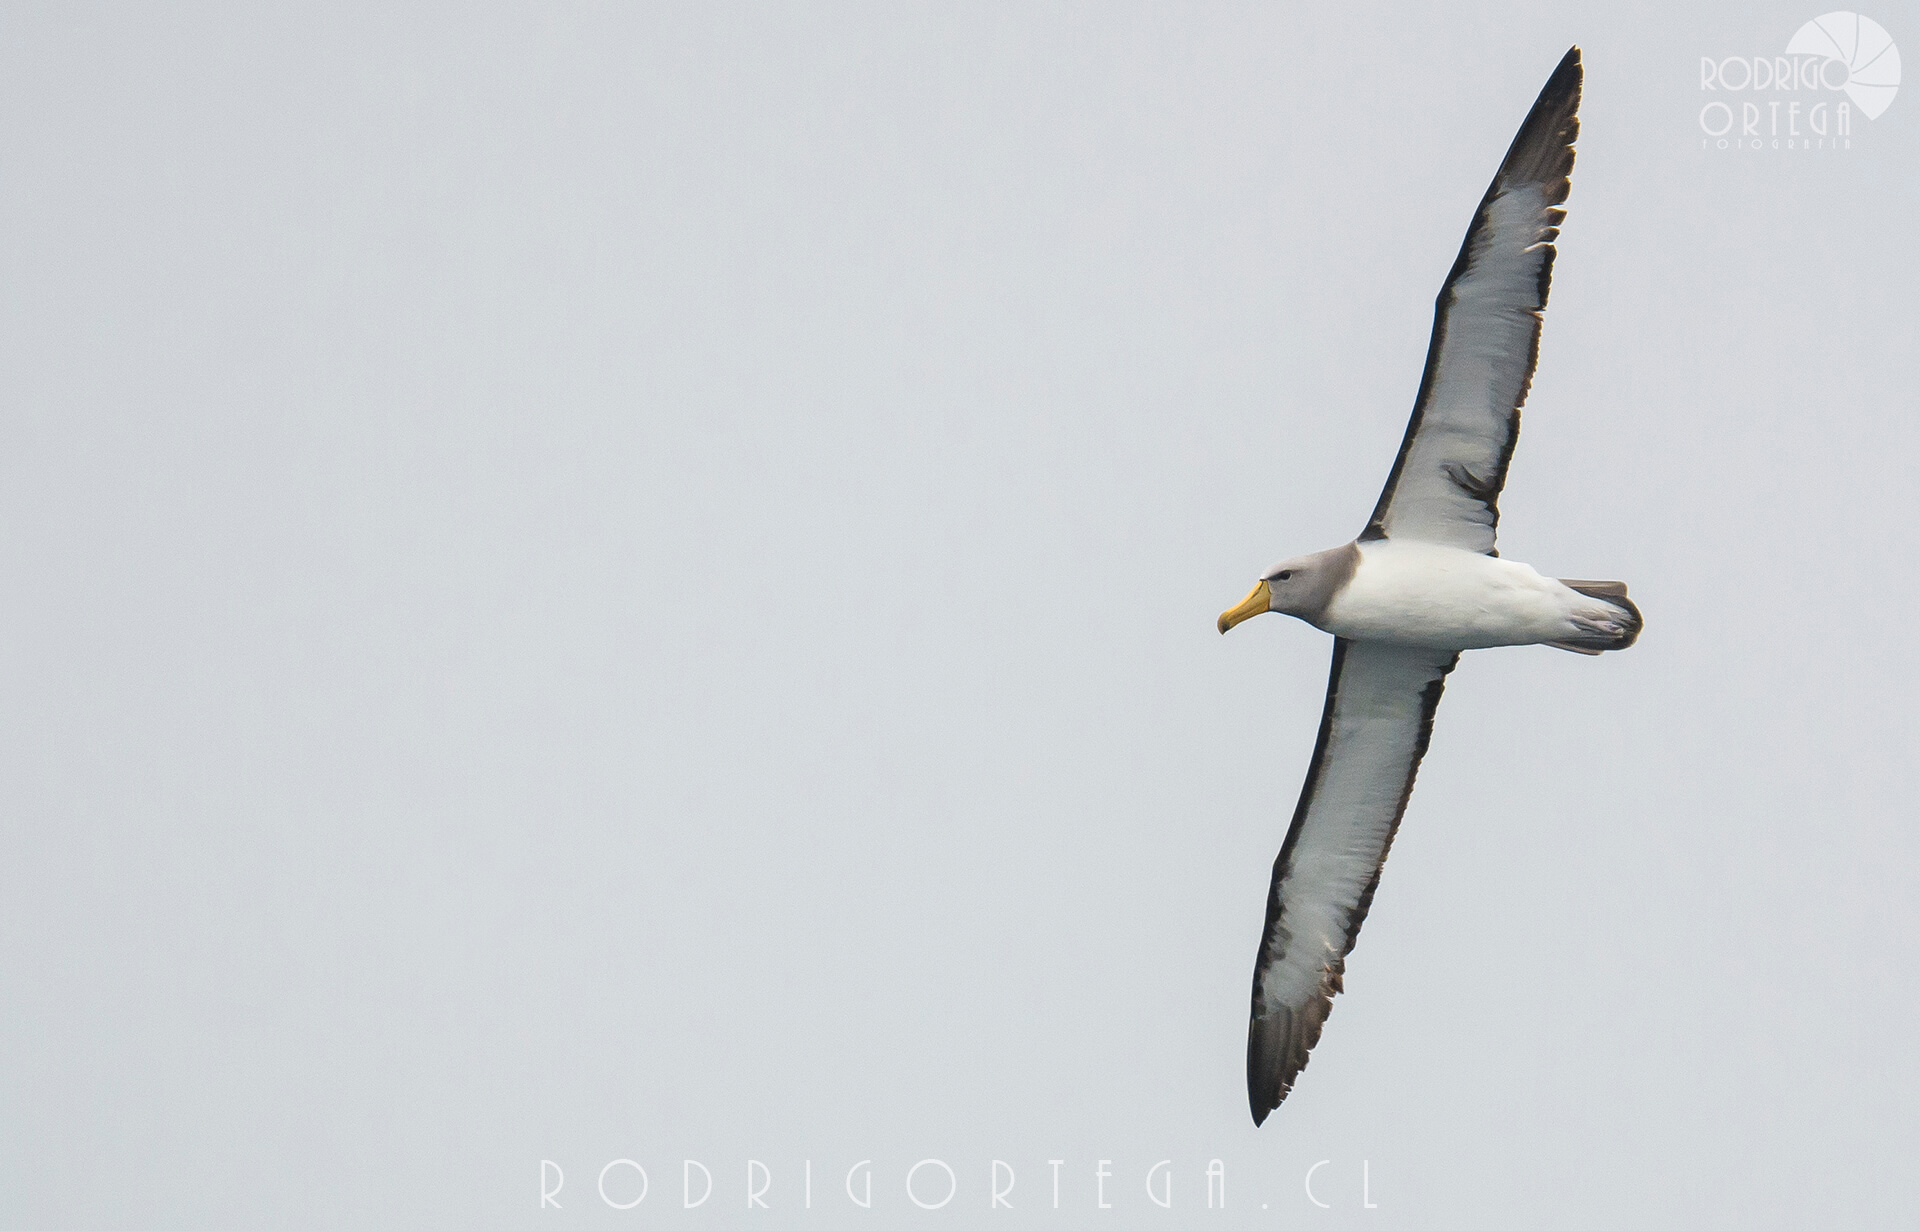 albatros de chatham 2 Rodrigo Ortega - Naturaleza & Outdoor albatros de chatham 2